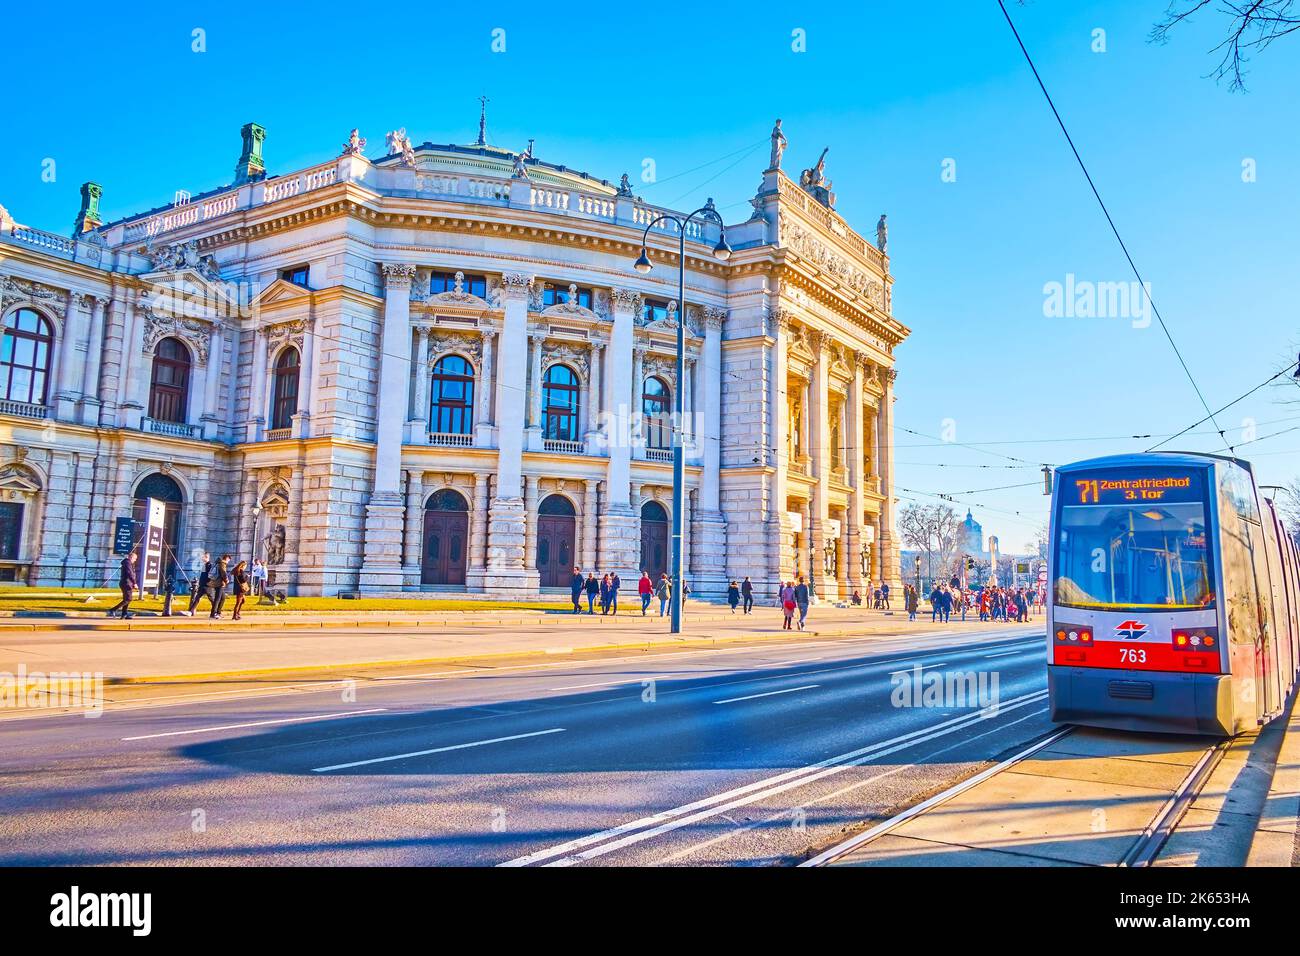 WIEN, ÖSTERREICH - 17. FEBRUAR 2019: Die moderne Stadtbahn hält am 17. Februar in Wien, Austr Stockfoto